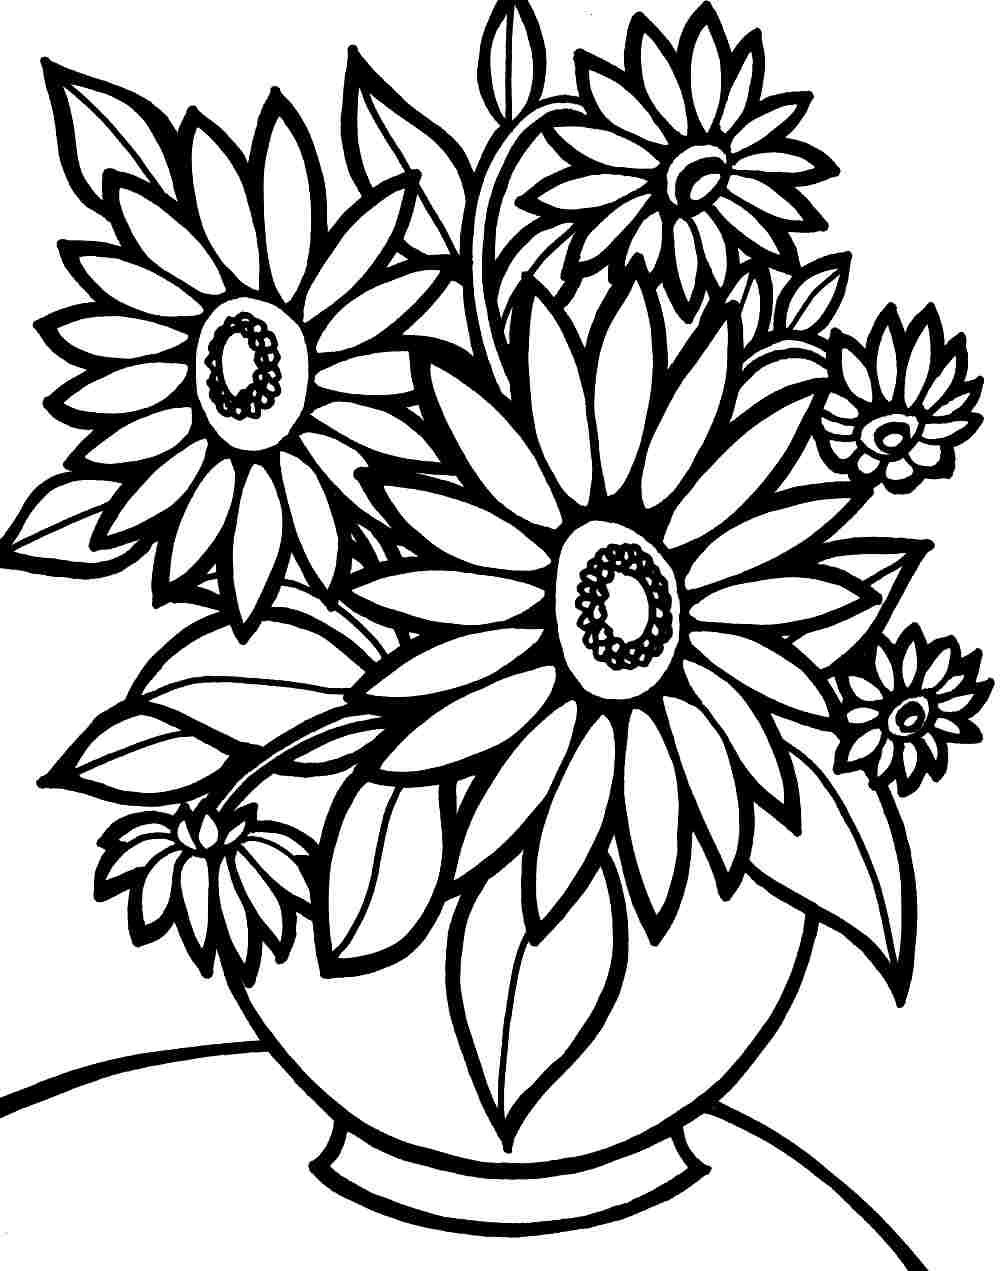 Coloring: Flower Bouquet Coloring Pages